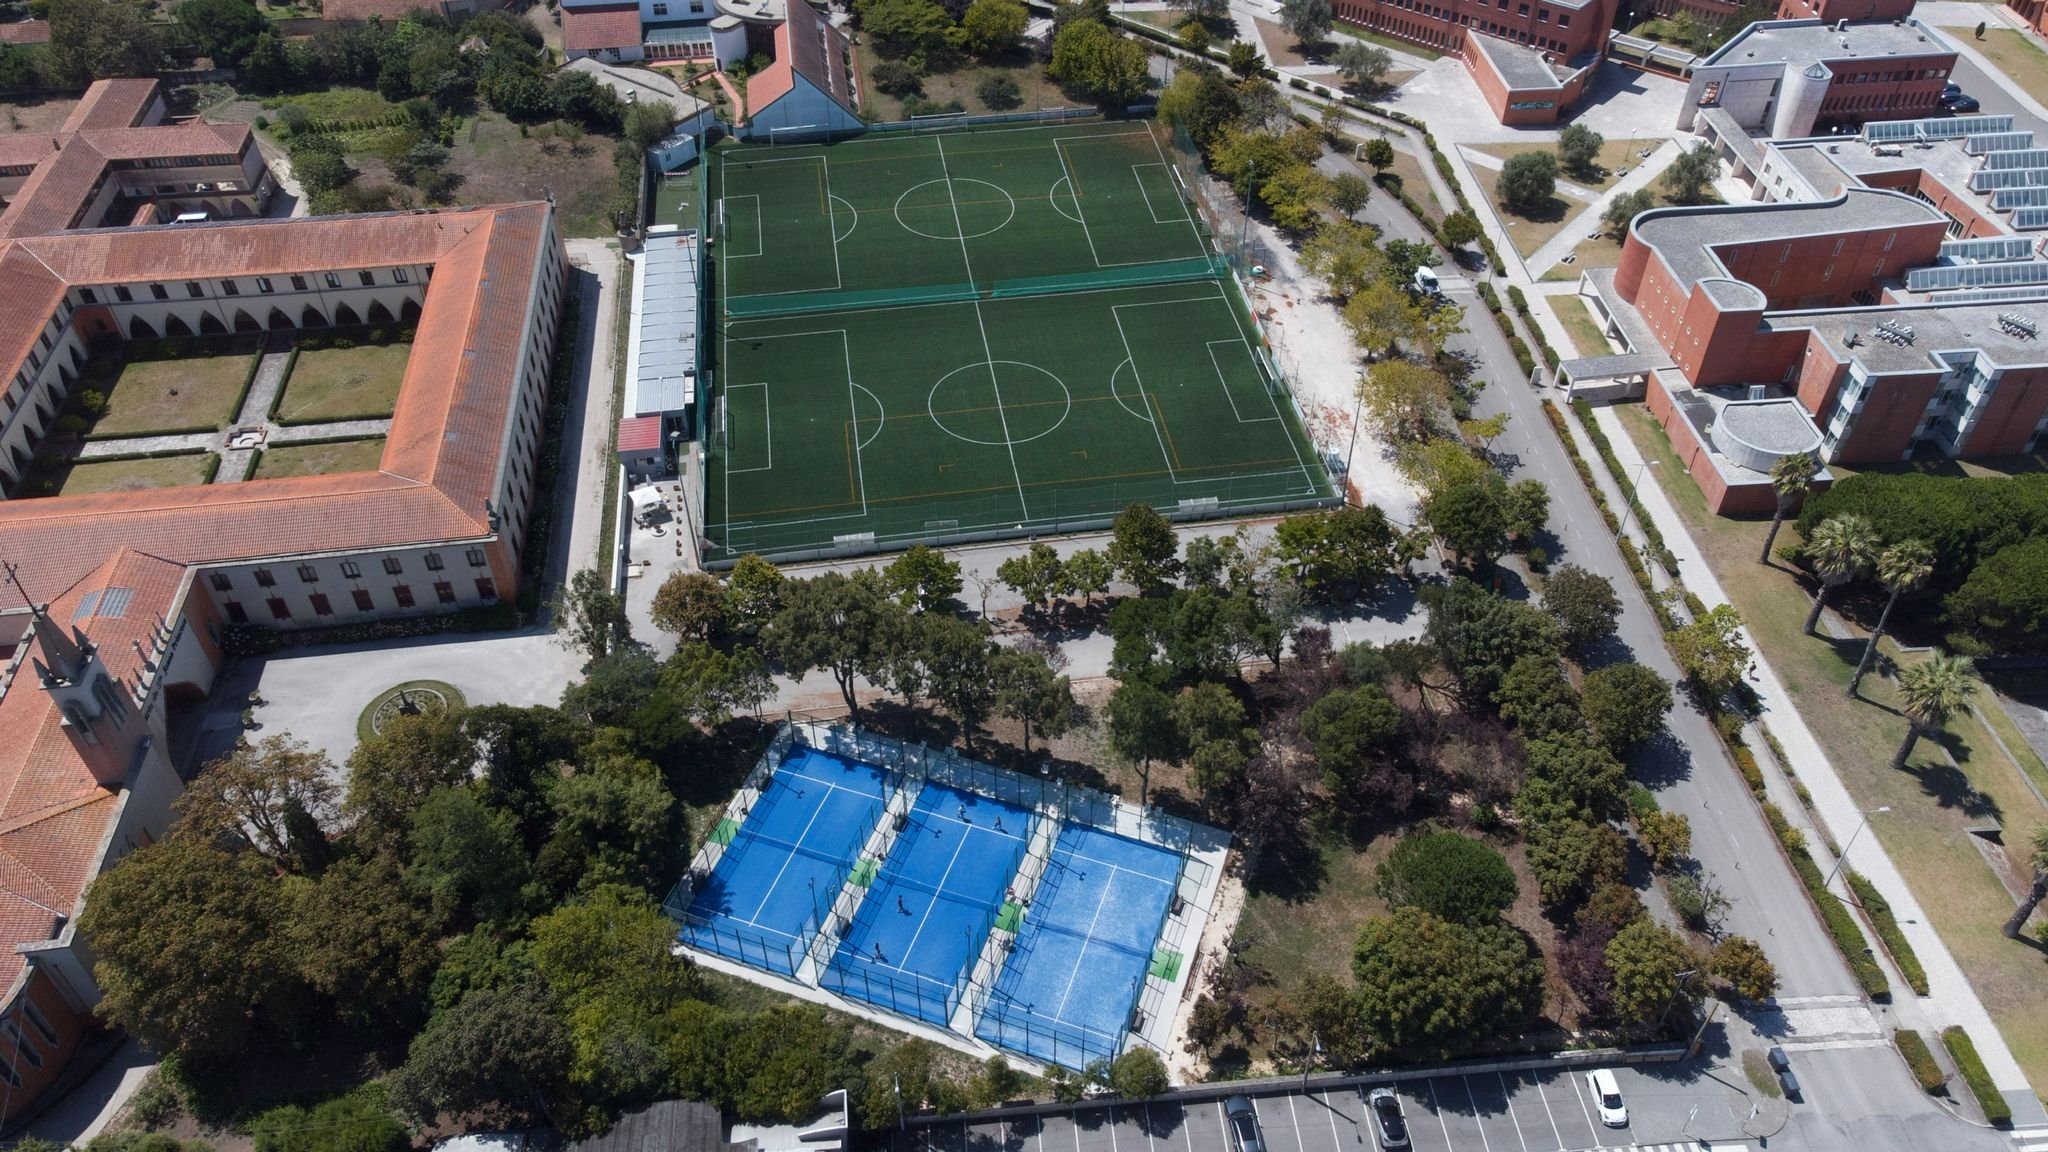 Residential Soccer School in Portugal 2.jpeg